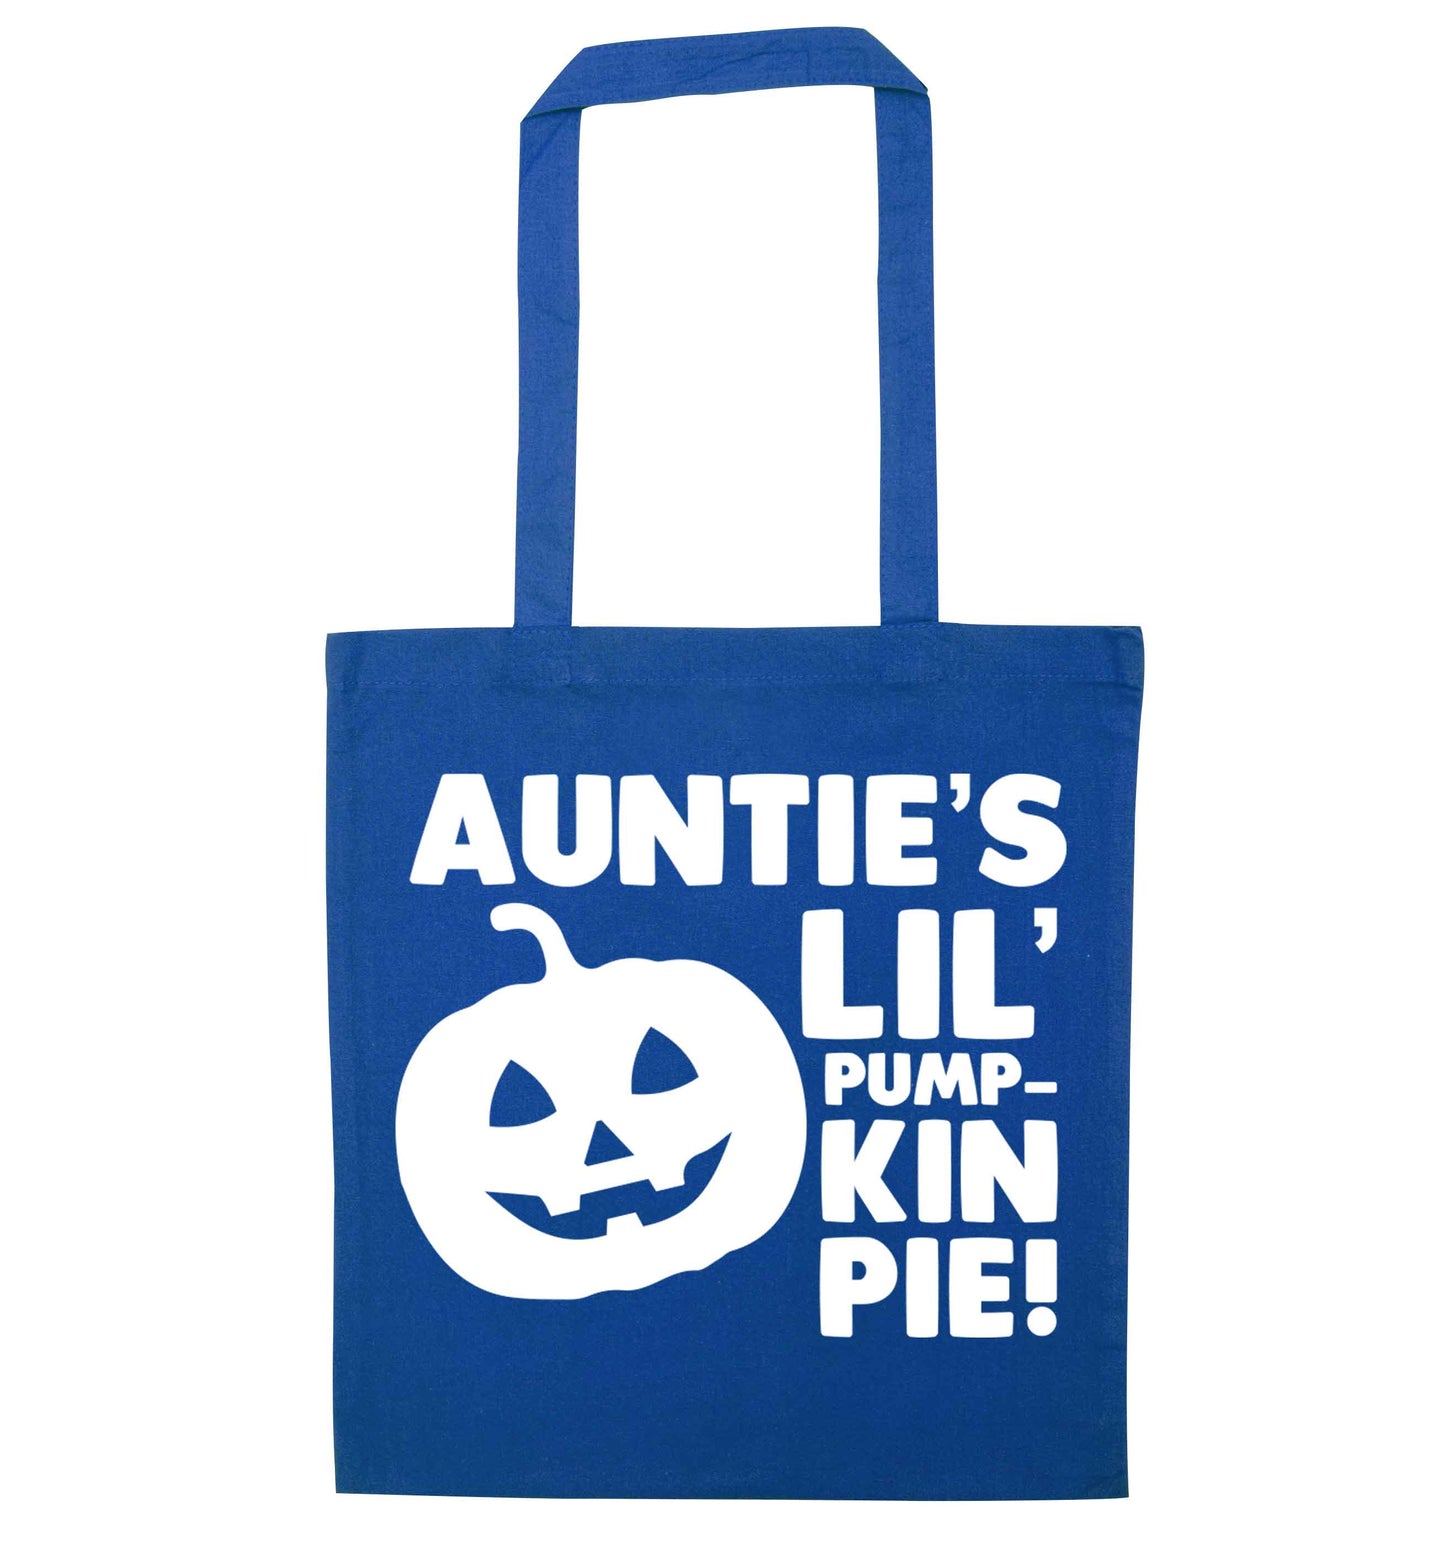 Auntie's lil' pumpkin pie blue tote bag